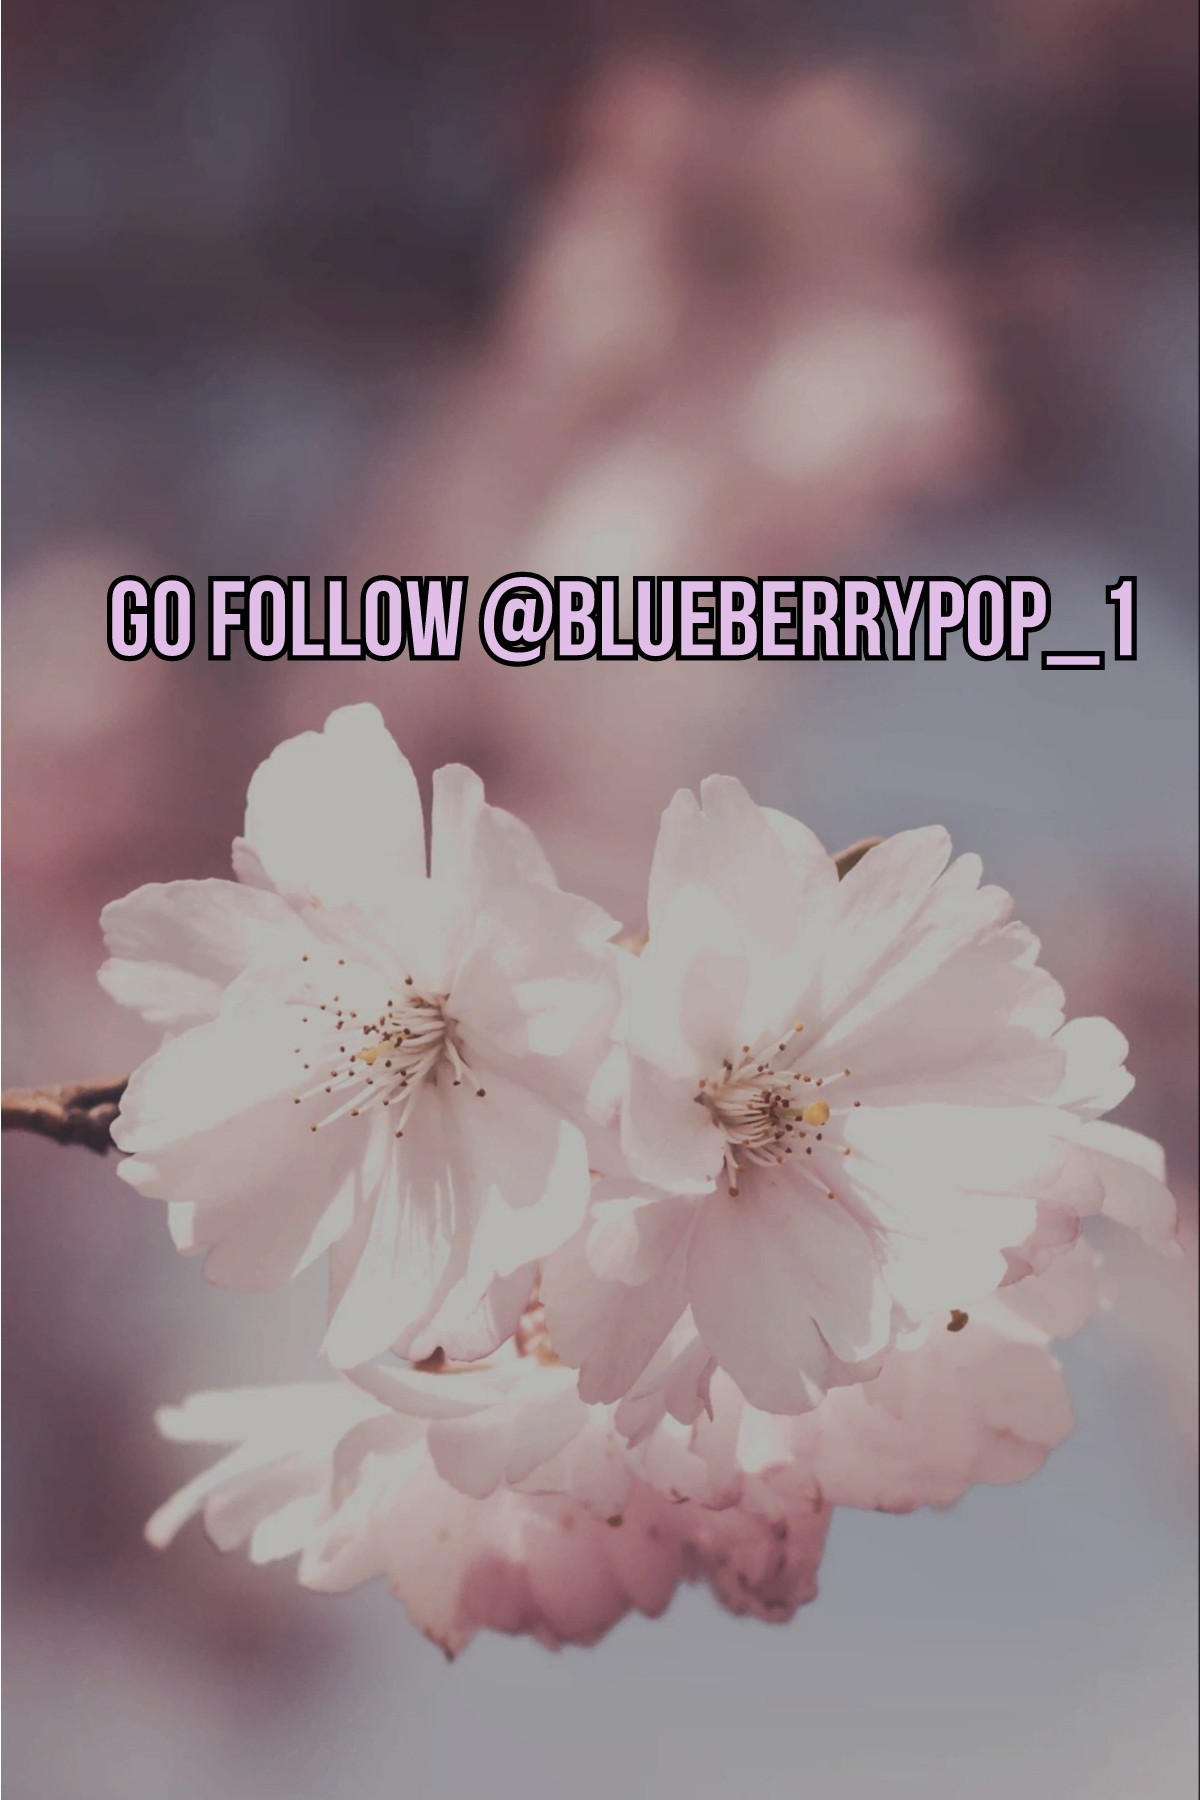 Go follow @blueberrypop_1, my bestie!!!